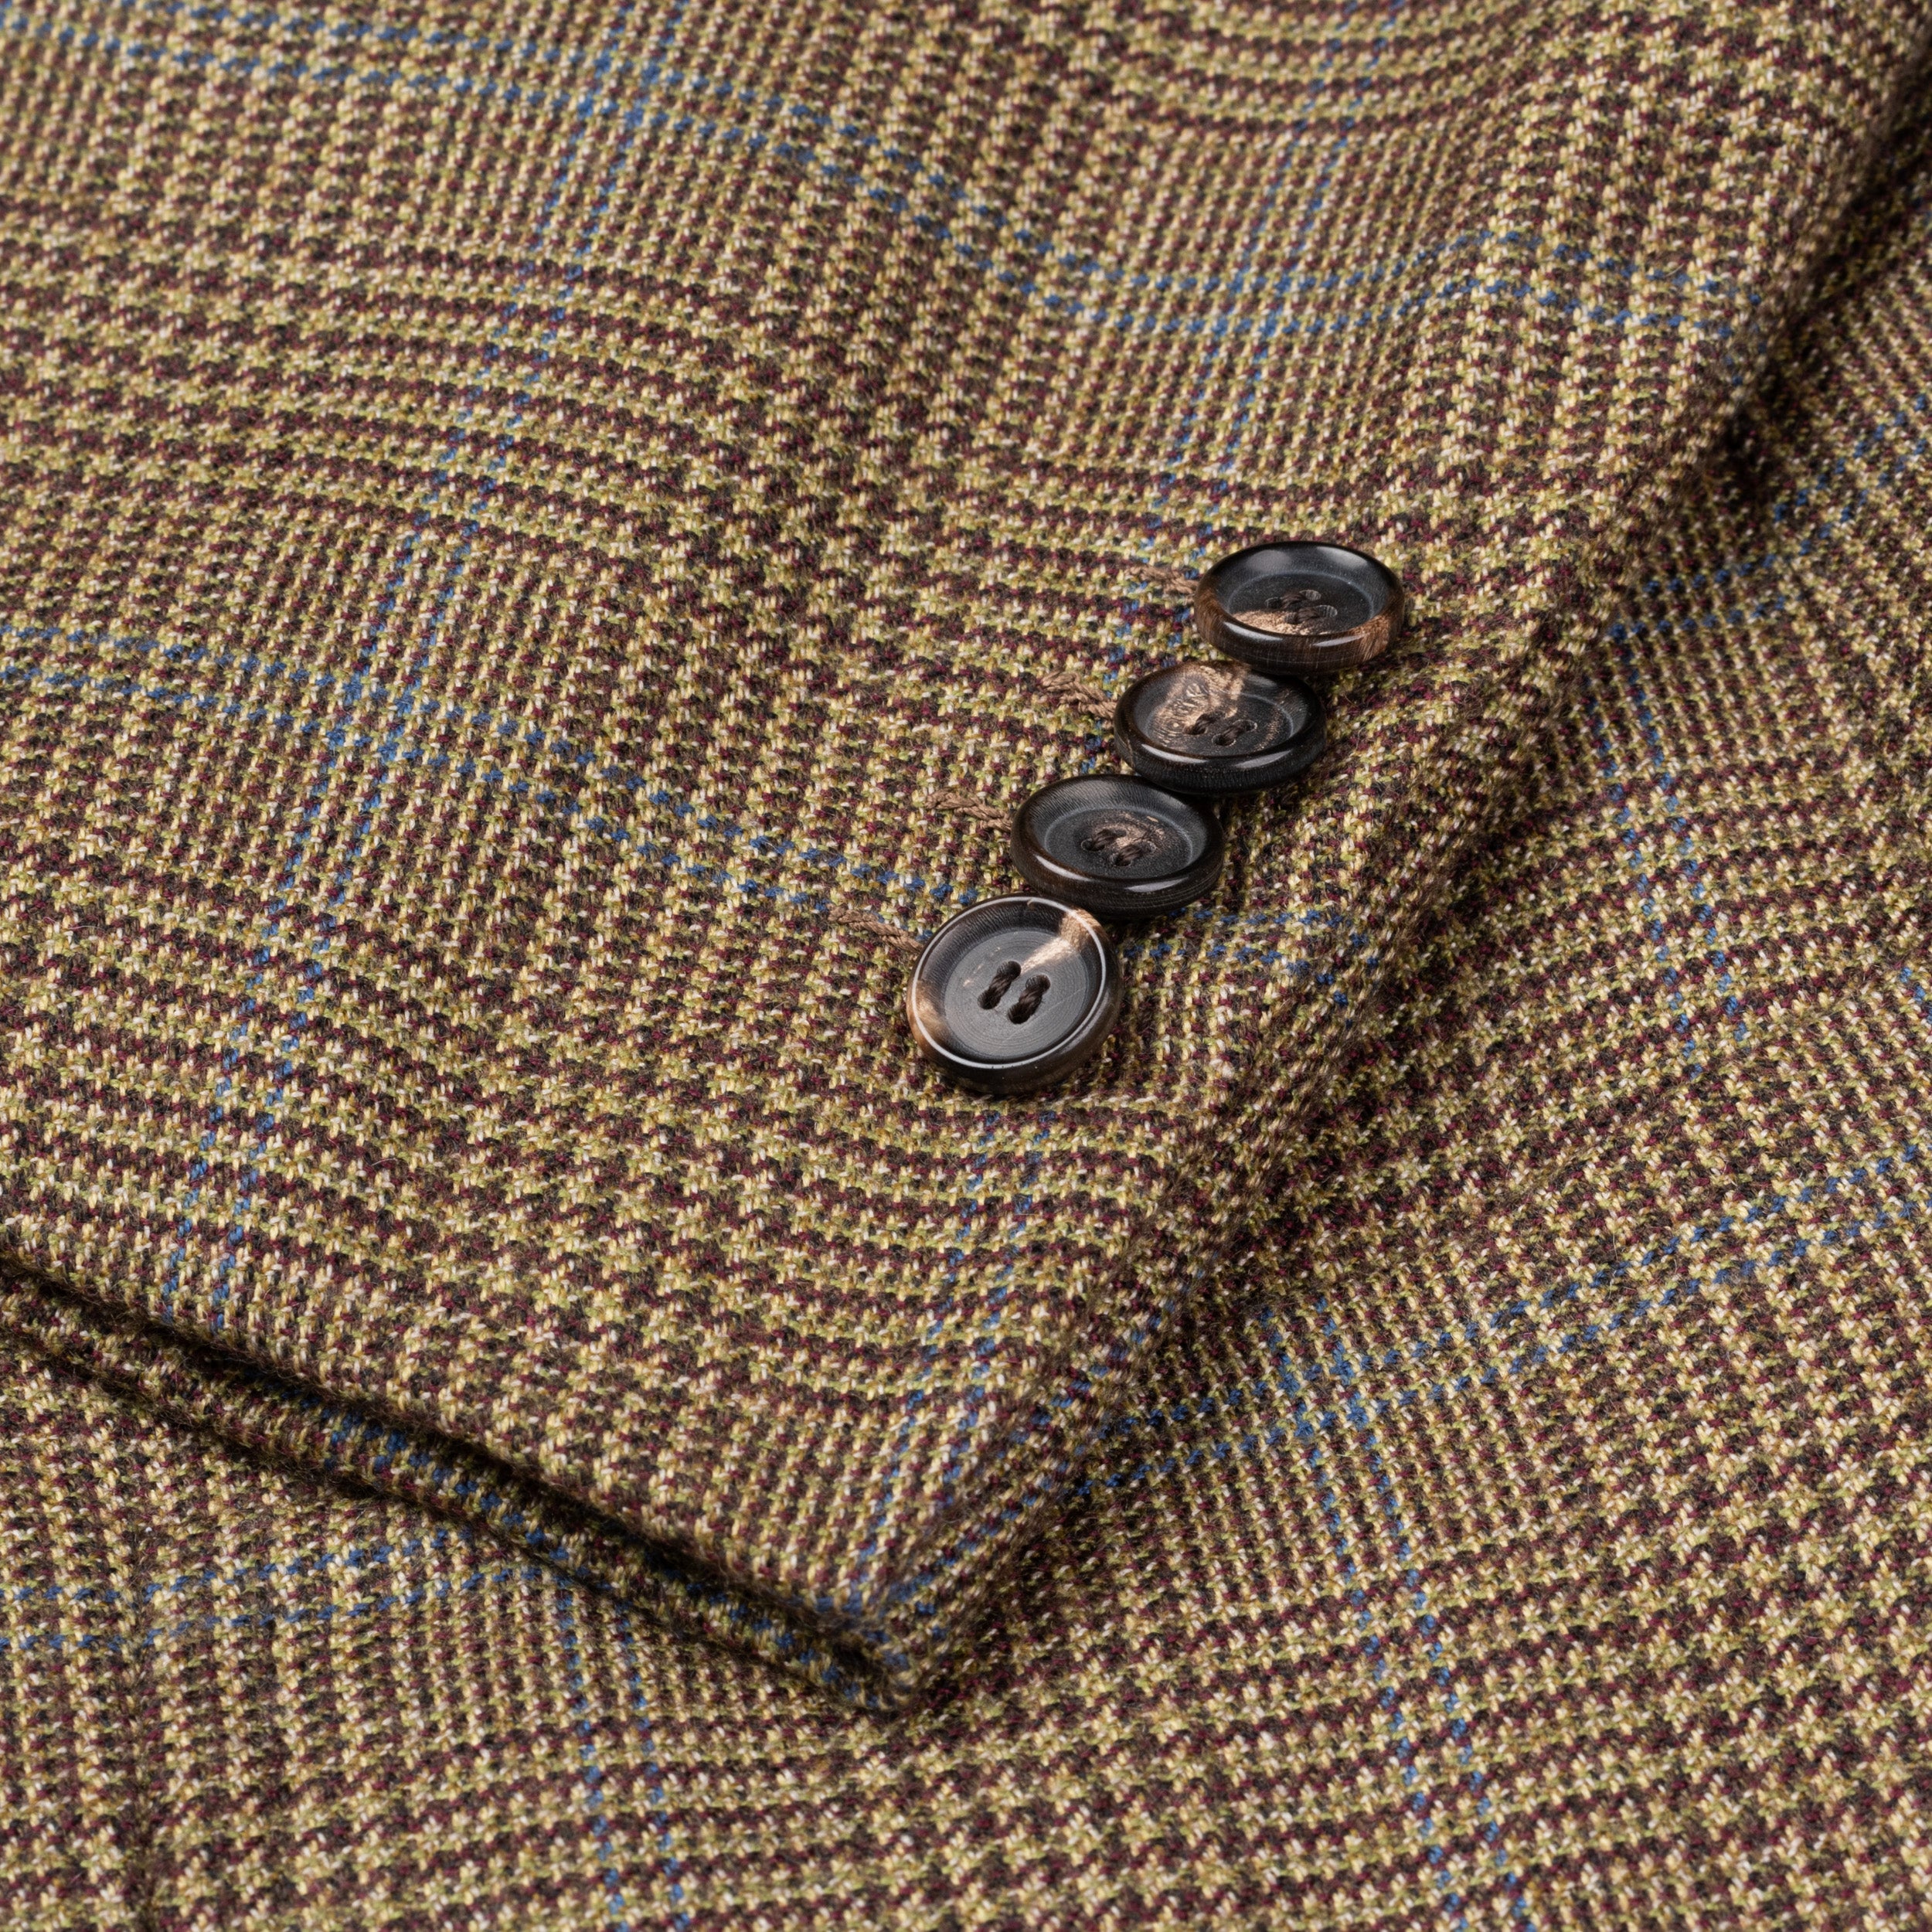 CESARE ATTOLINI Olive Prince of Wales Wool Cashmere Blazer Jacket 50 NEW US 40 CESARE ATTOLINI